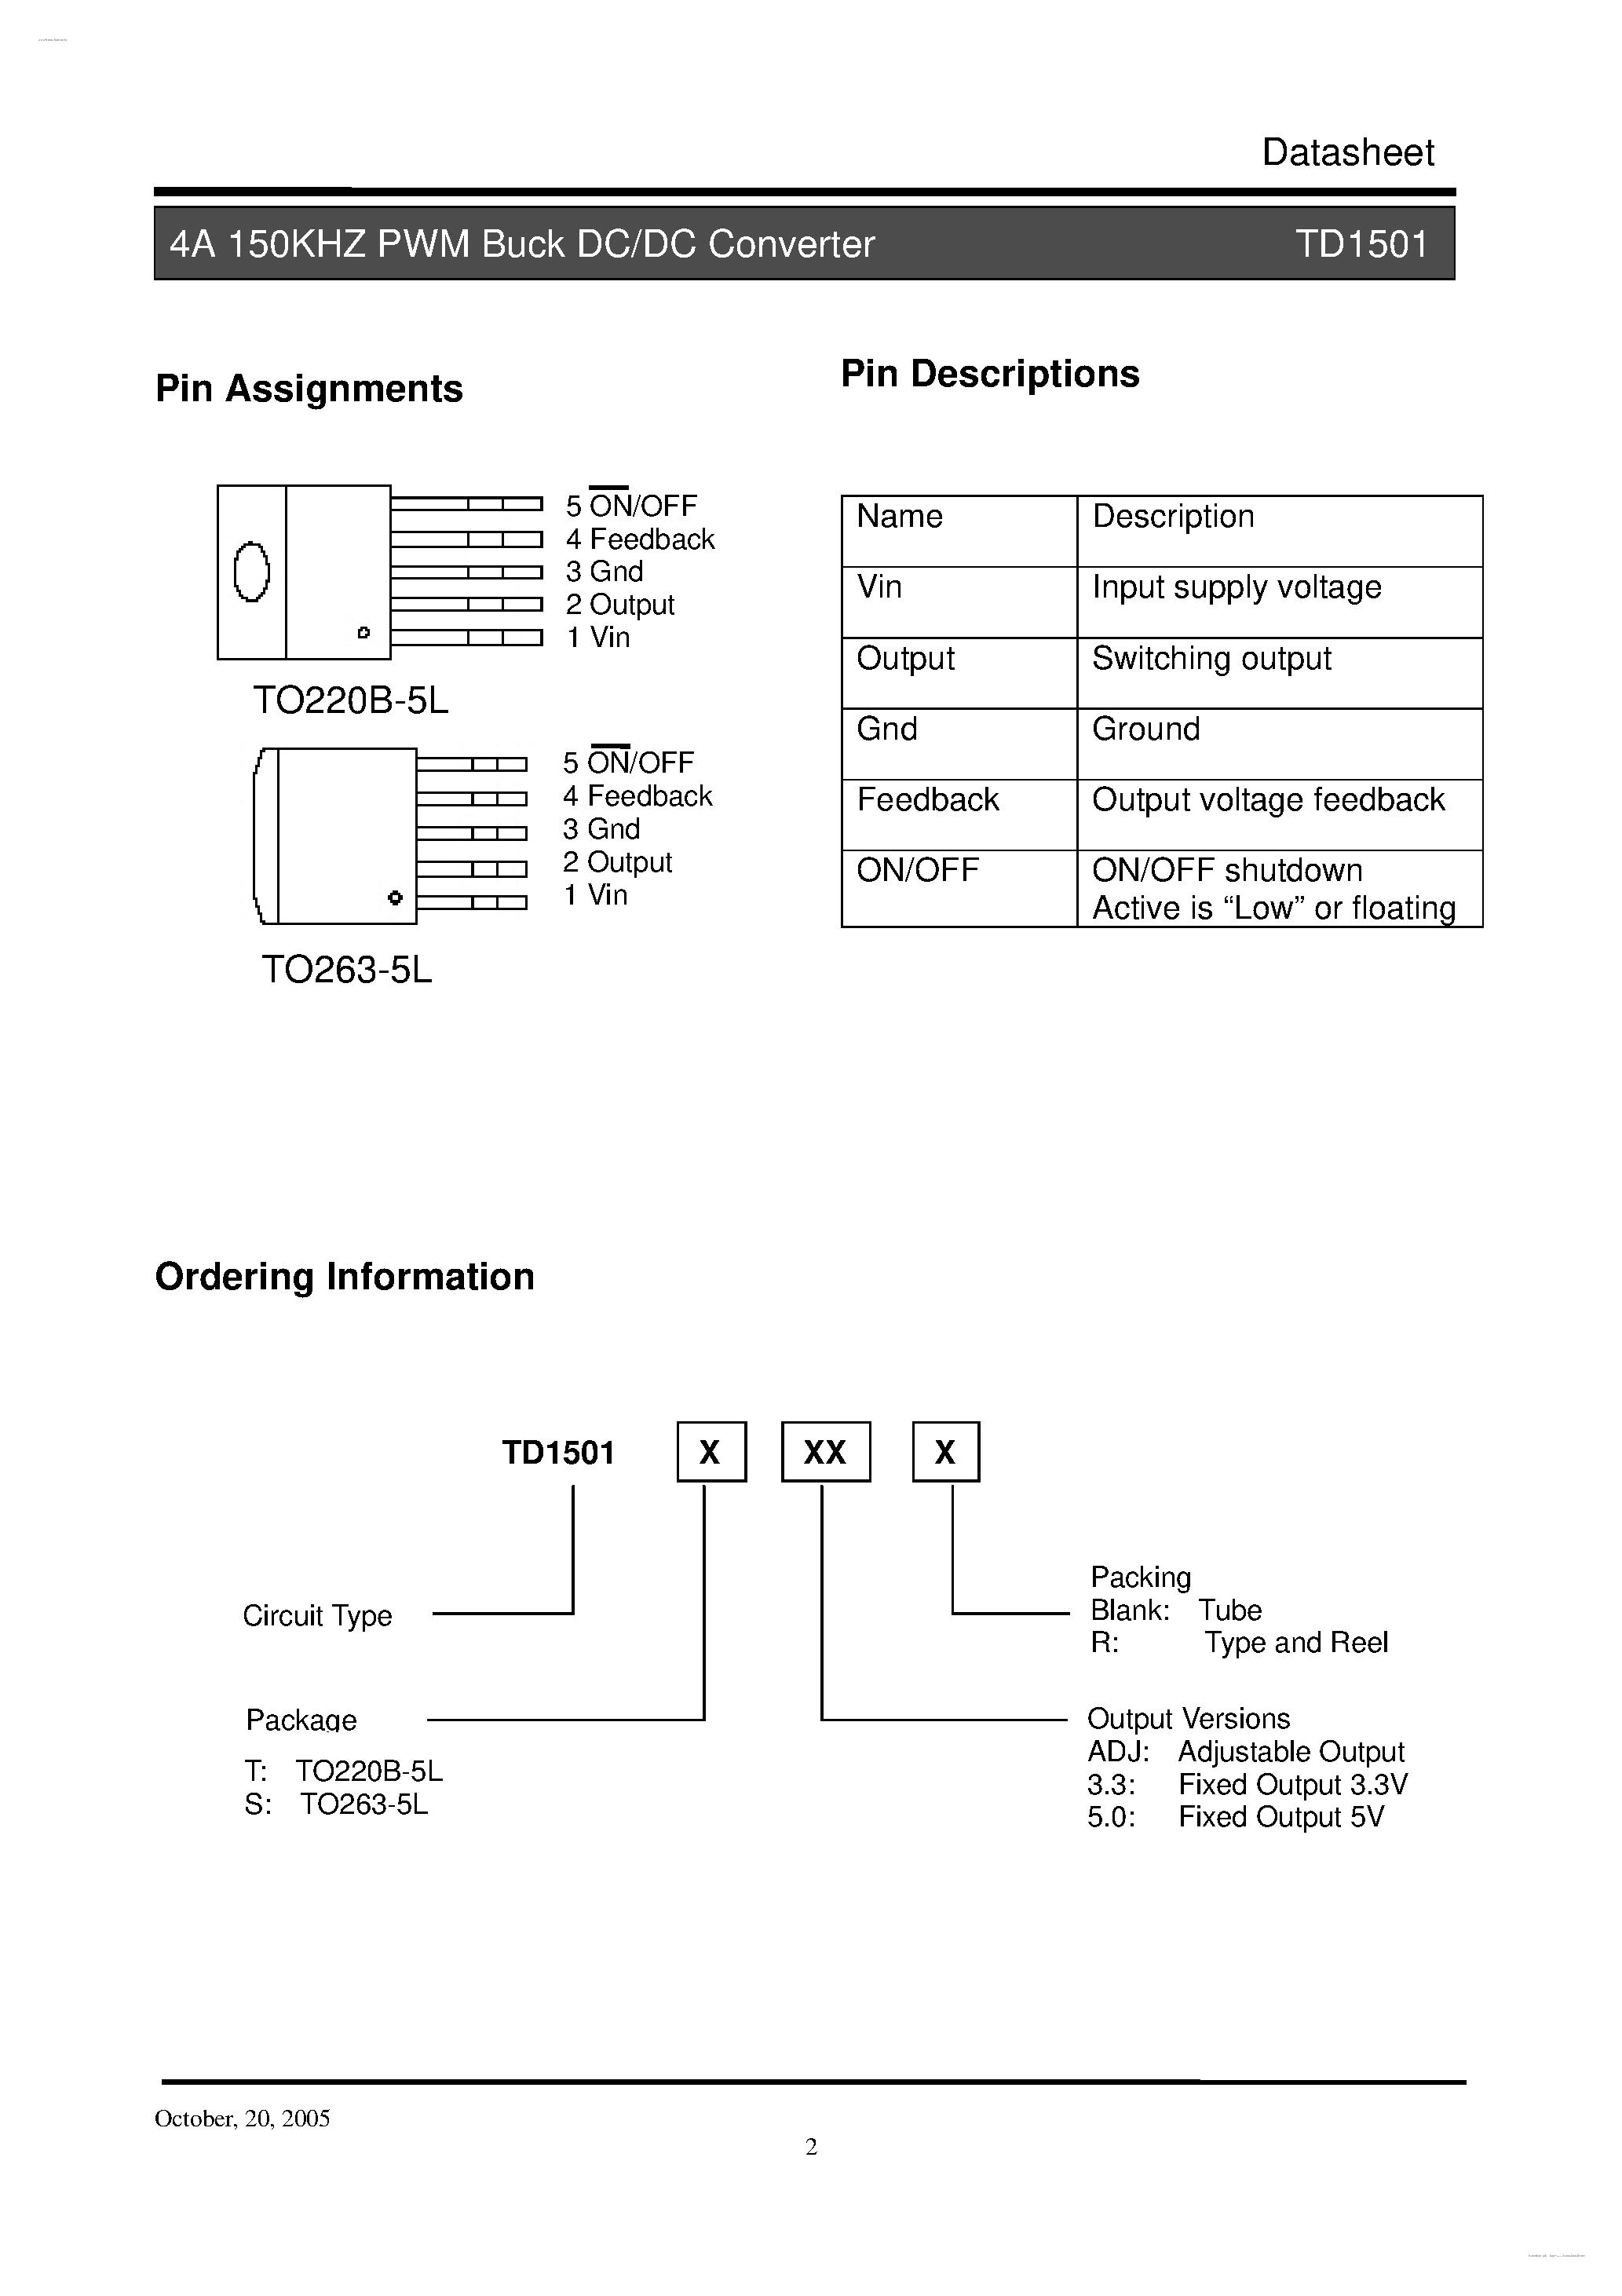 Datasheet TD1501 - 4A 150KHZ PWM Buck DC/DC Converter page 2